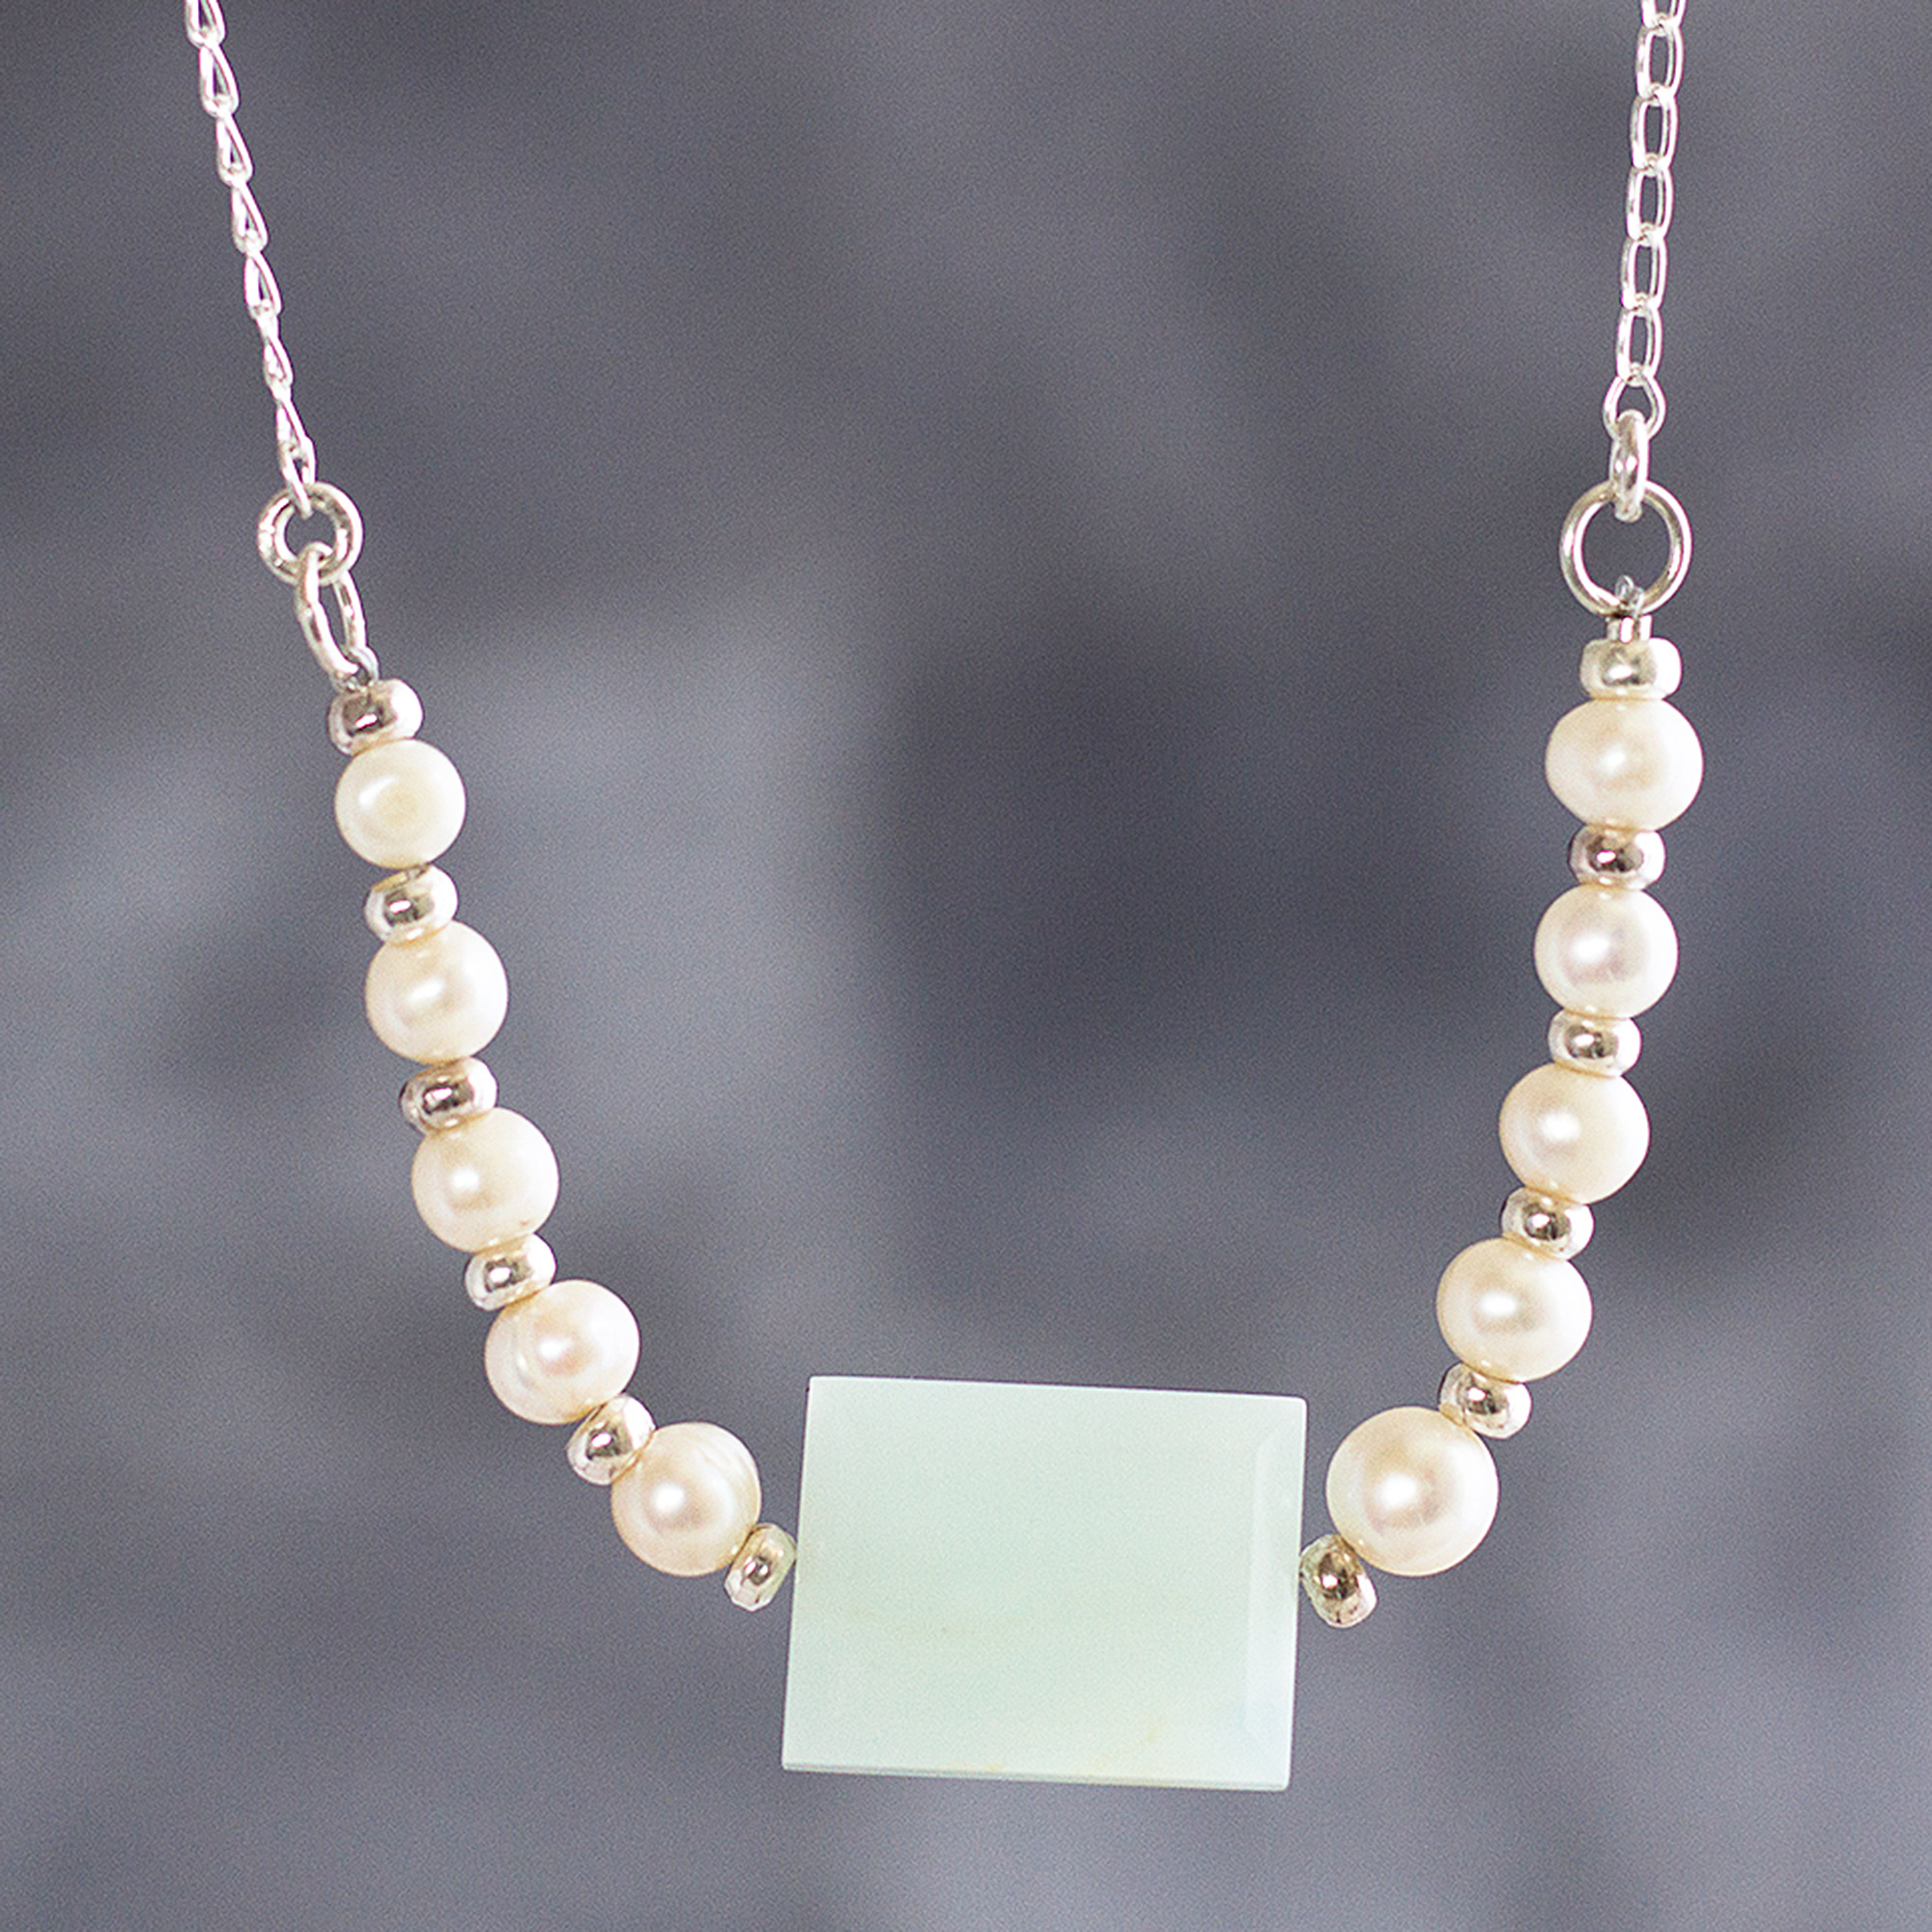 Colgante Perla - Collares Perlas de Plata de Ley 925 o bañados en